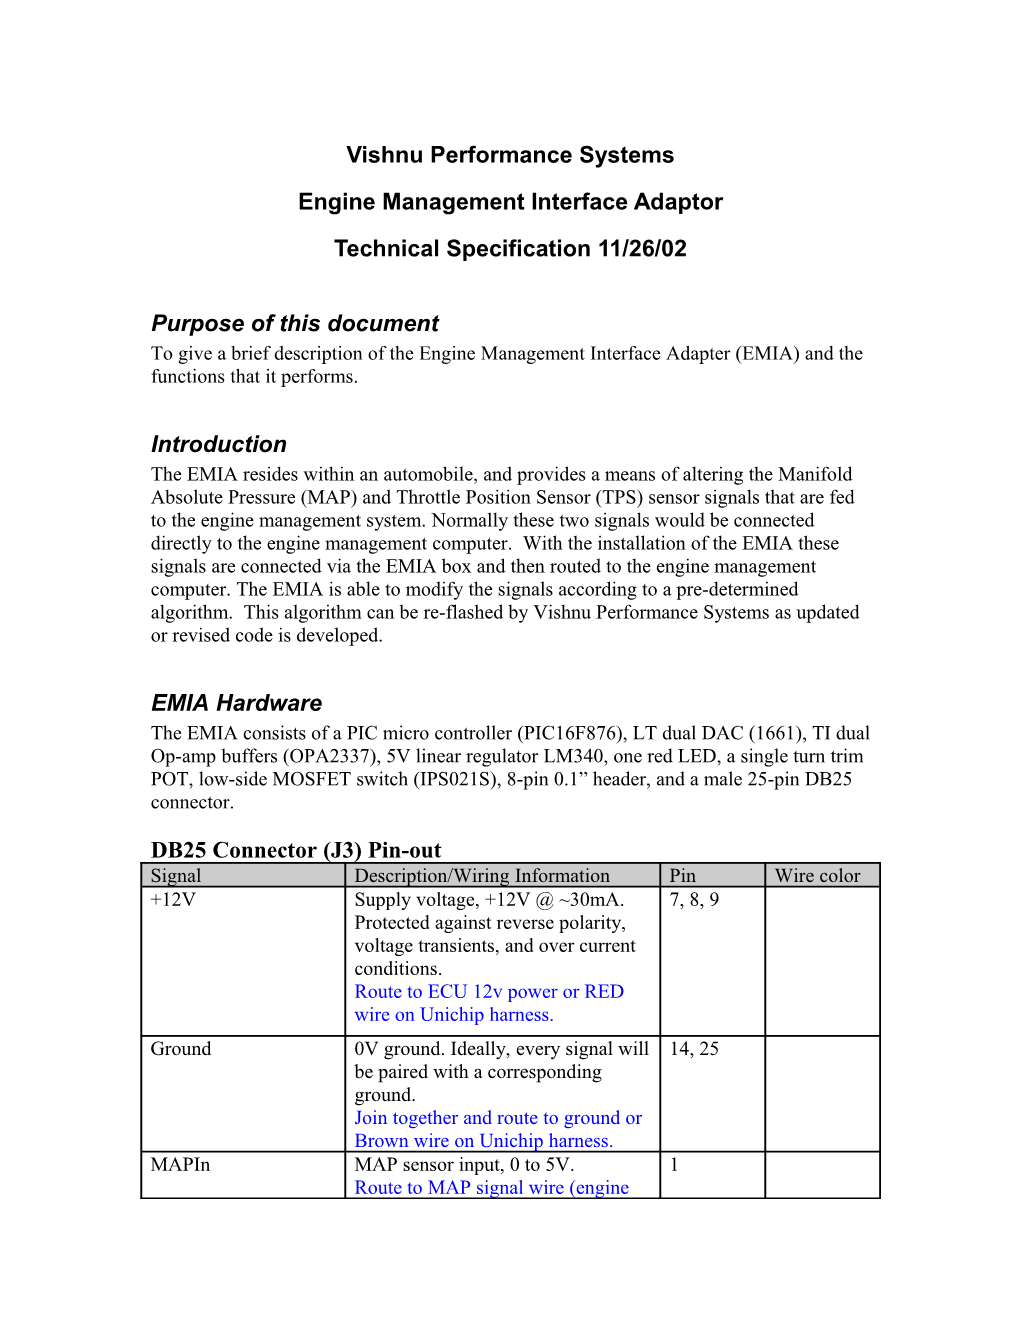 Engine Management Interface (EMI) Adaptor Specification